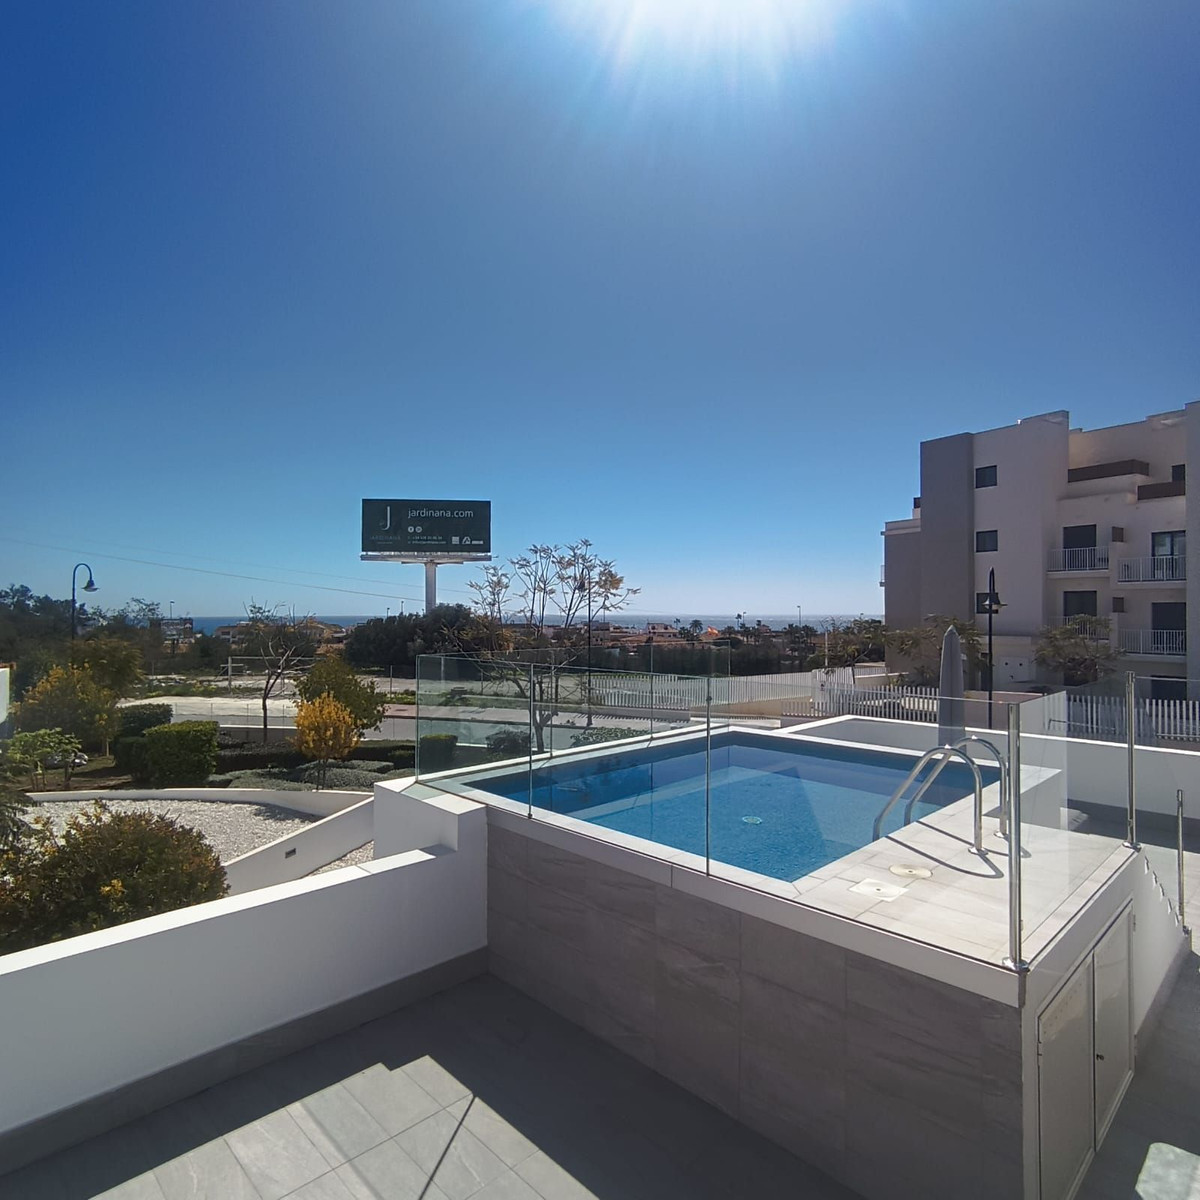 						Apartment  Penthouse
													for sale 
																			 in La Cala de Mijas
					